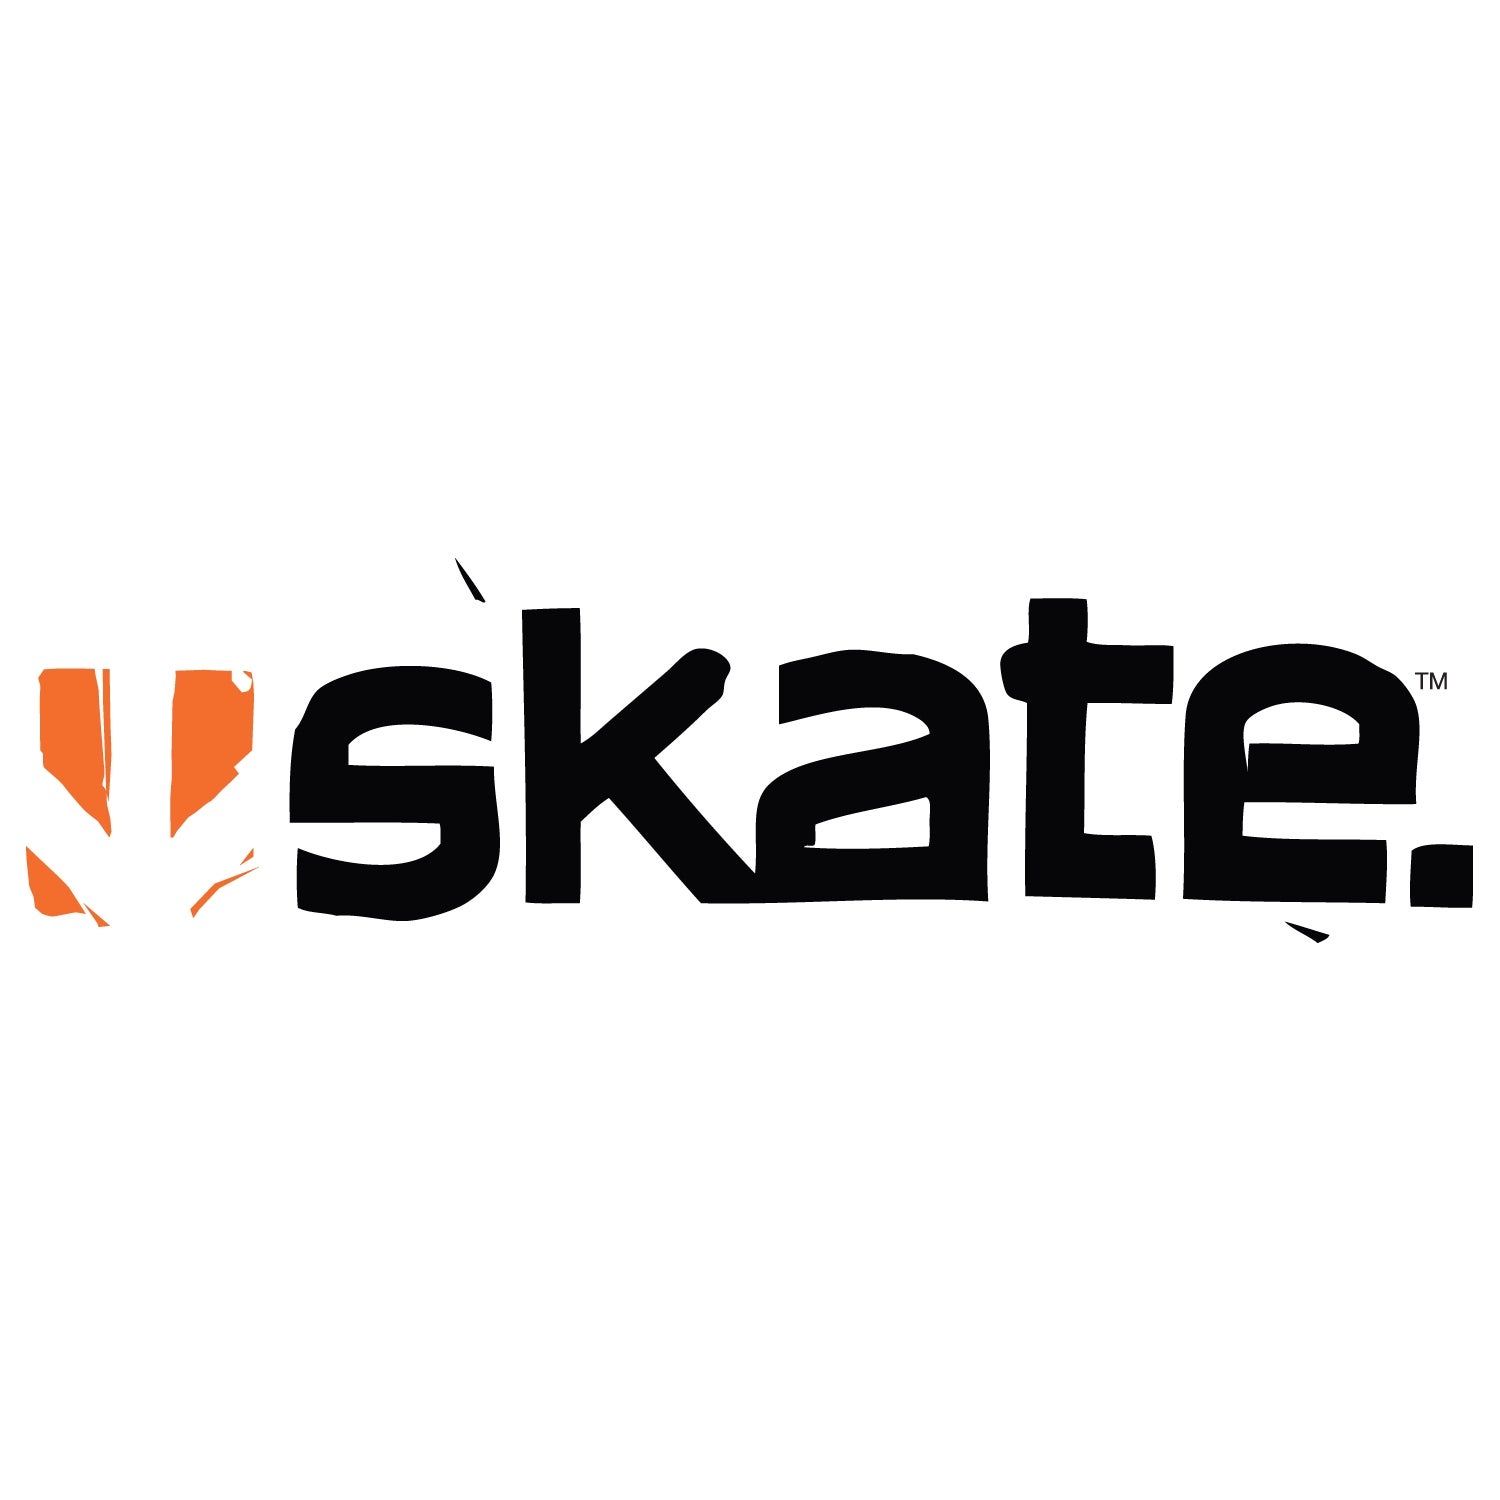 Skate 4